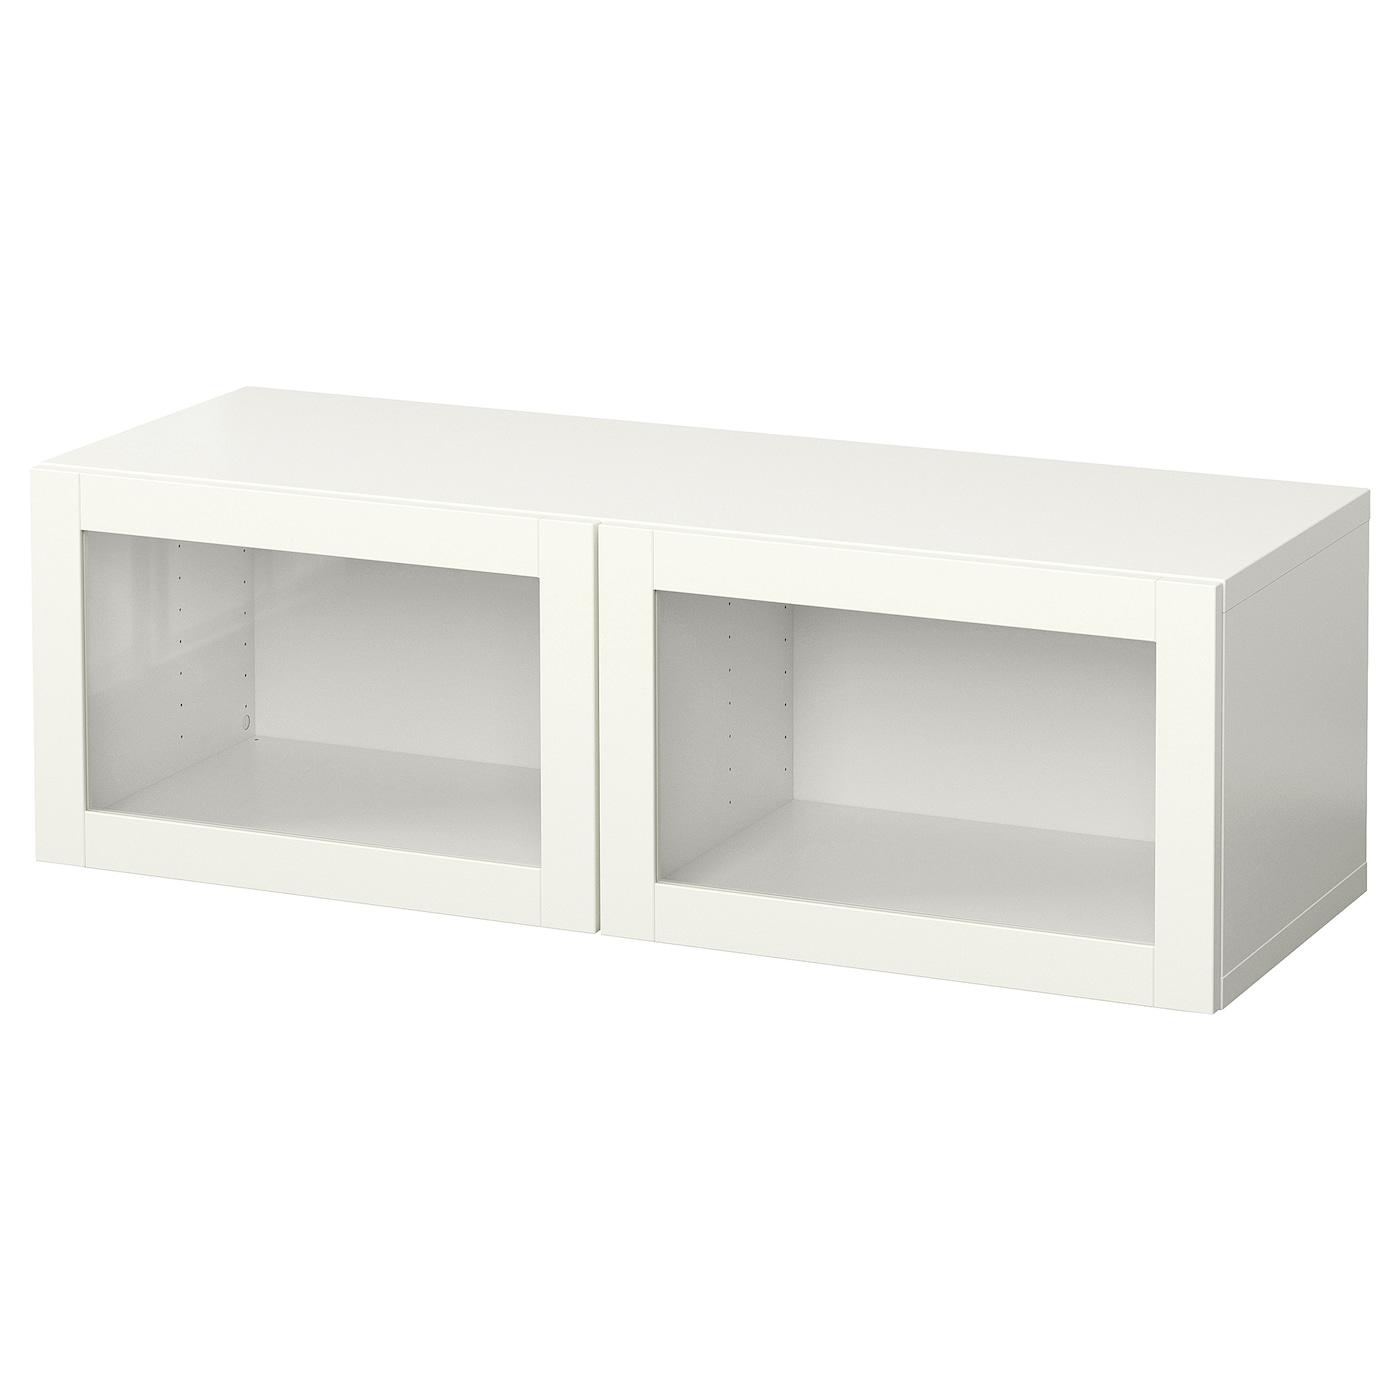 Навесной шкаф - IKEA BESTÅ/BESTA, 120x42x38 см, белый, БЕСТО ИКЕА